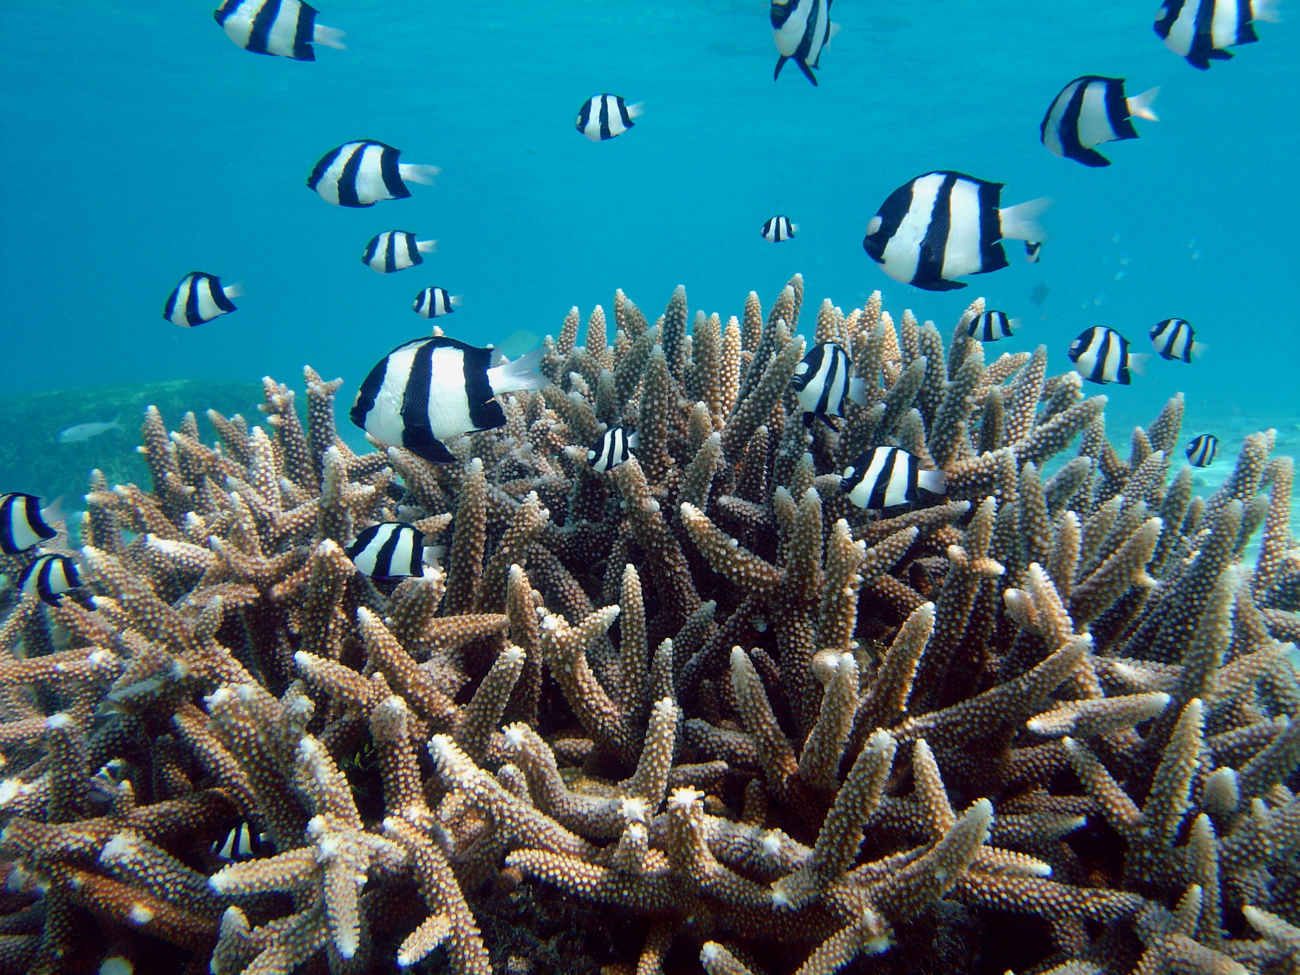 Reef scene with damselfish (Dascyllus aruanus)